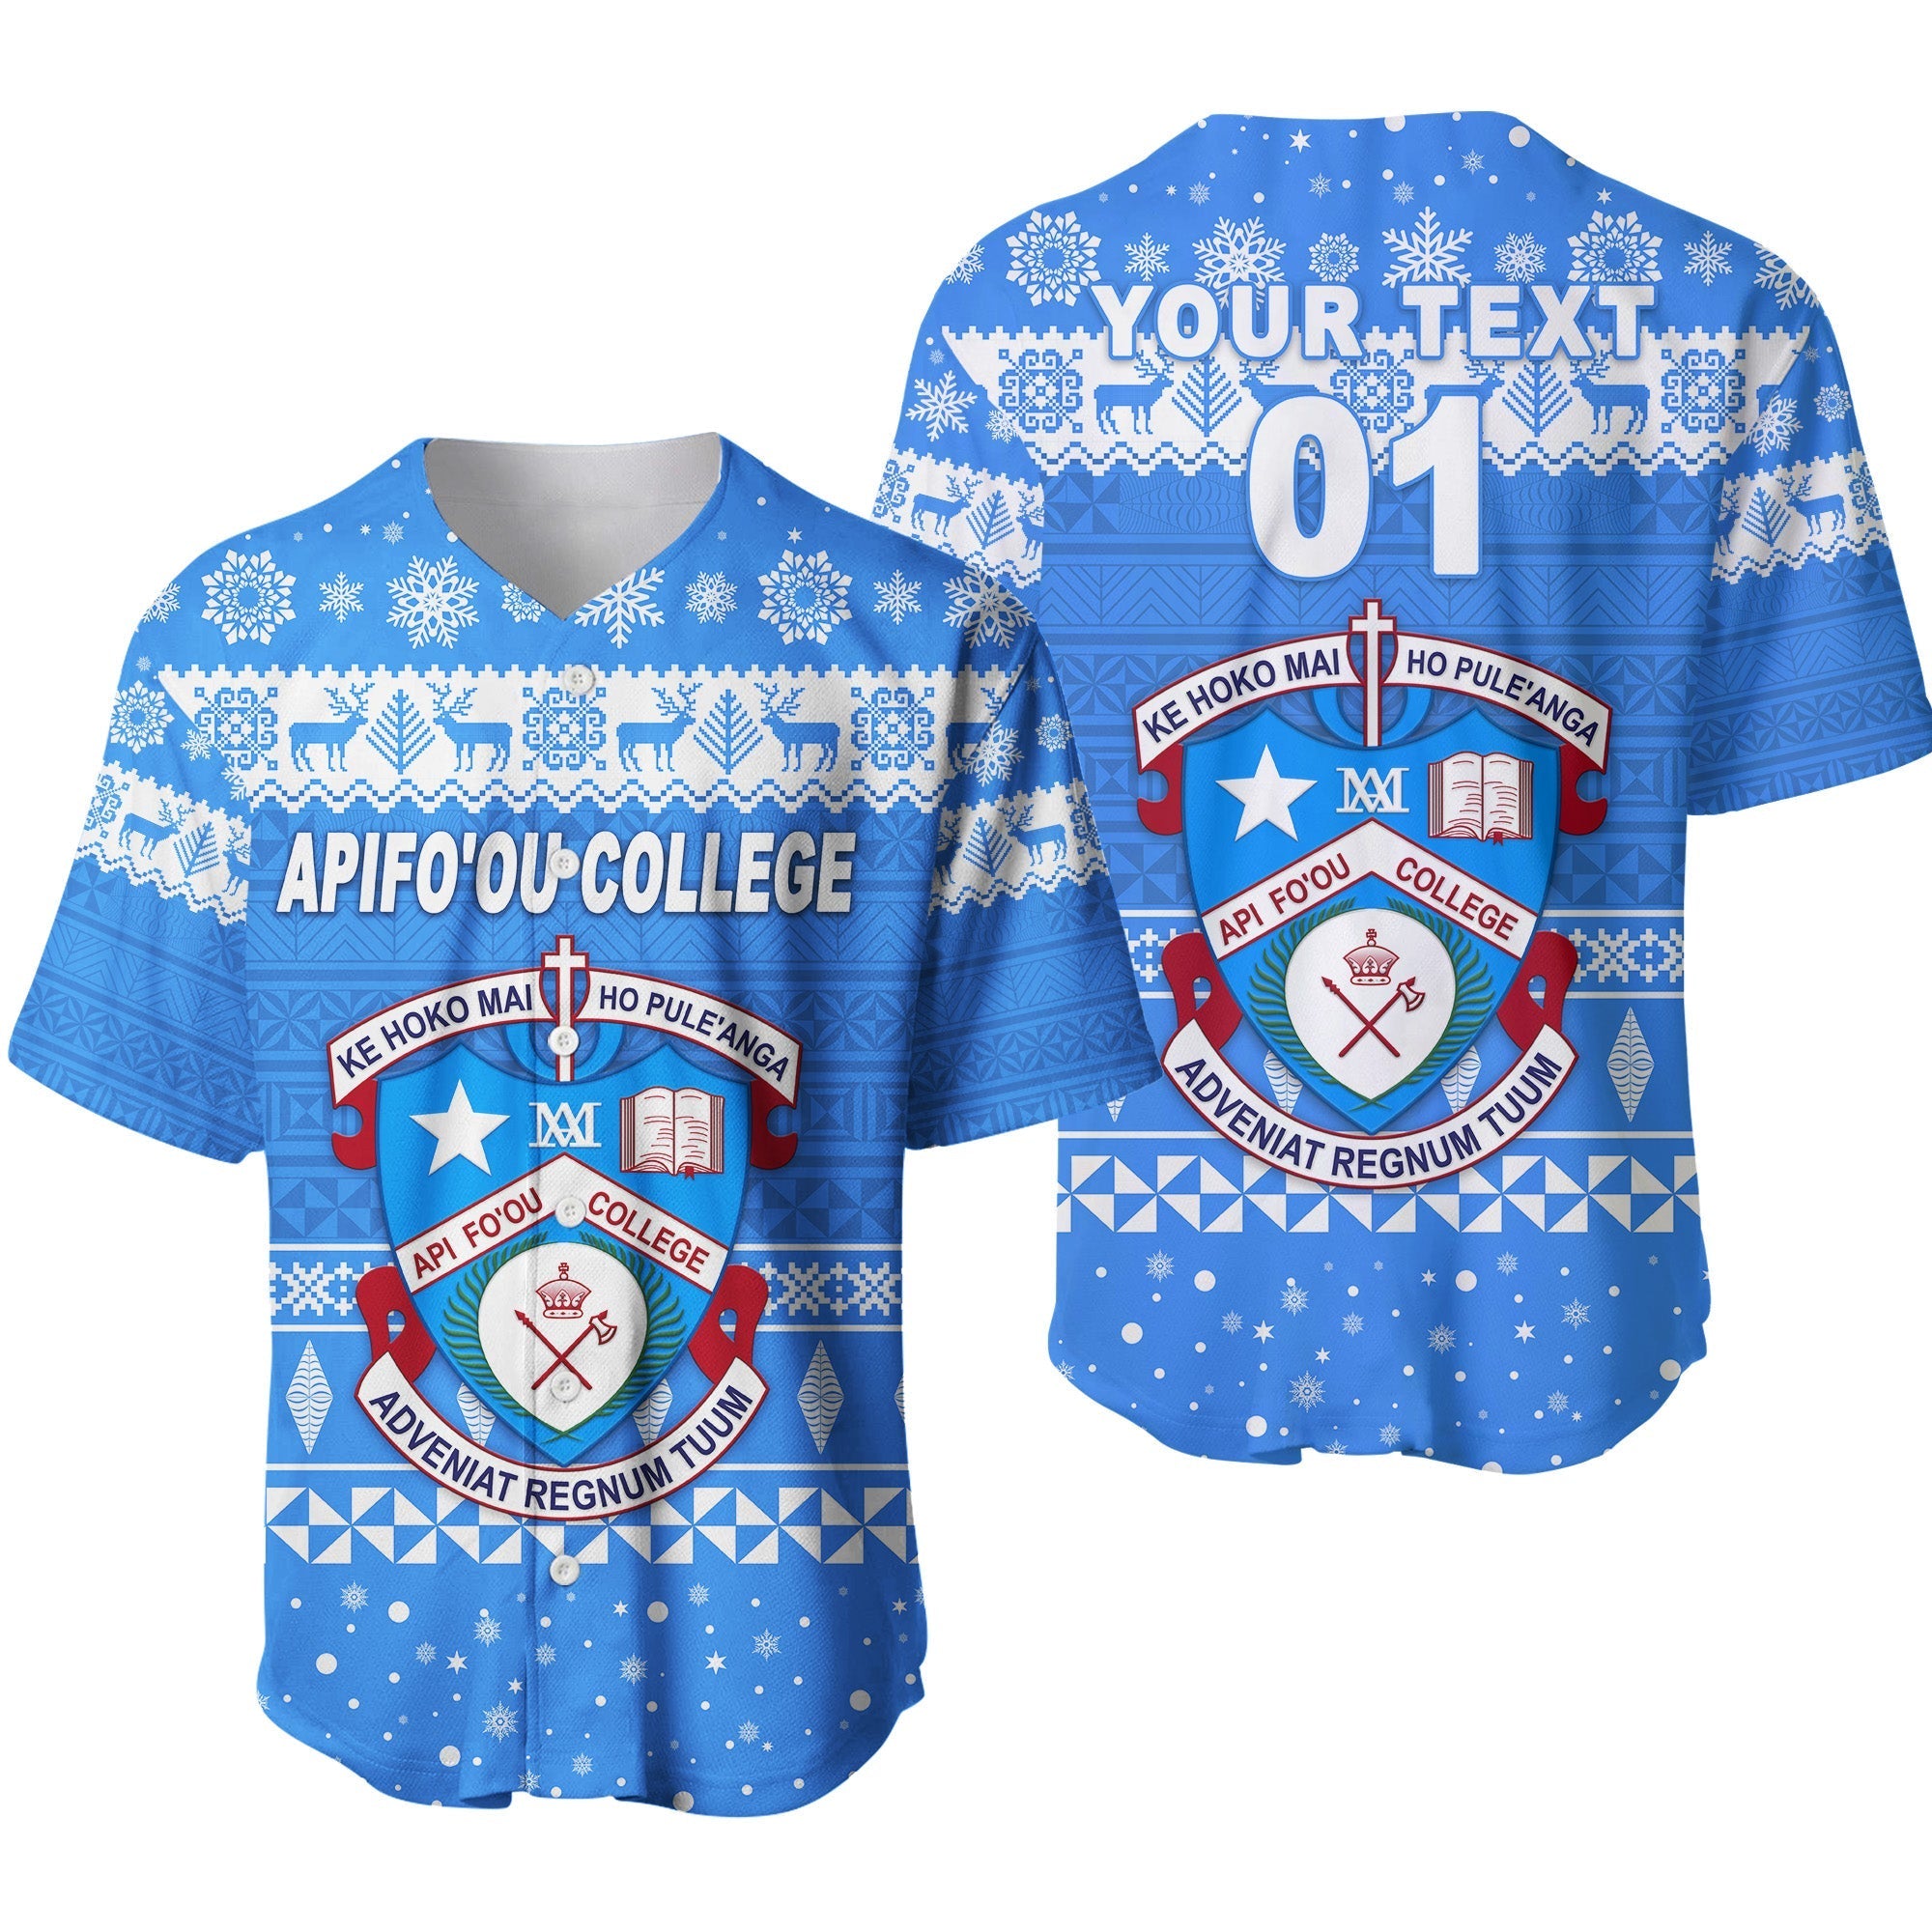 custom-personalised-apifoou-college-christmas-baseball-jersey-simple-style